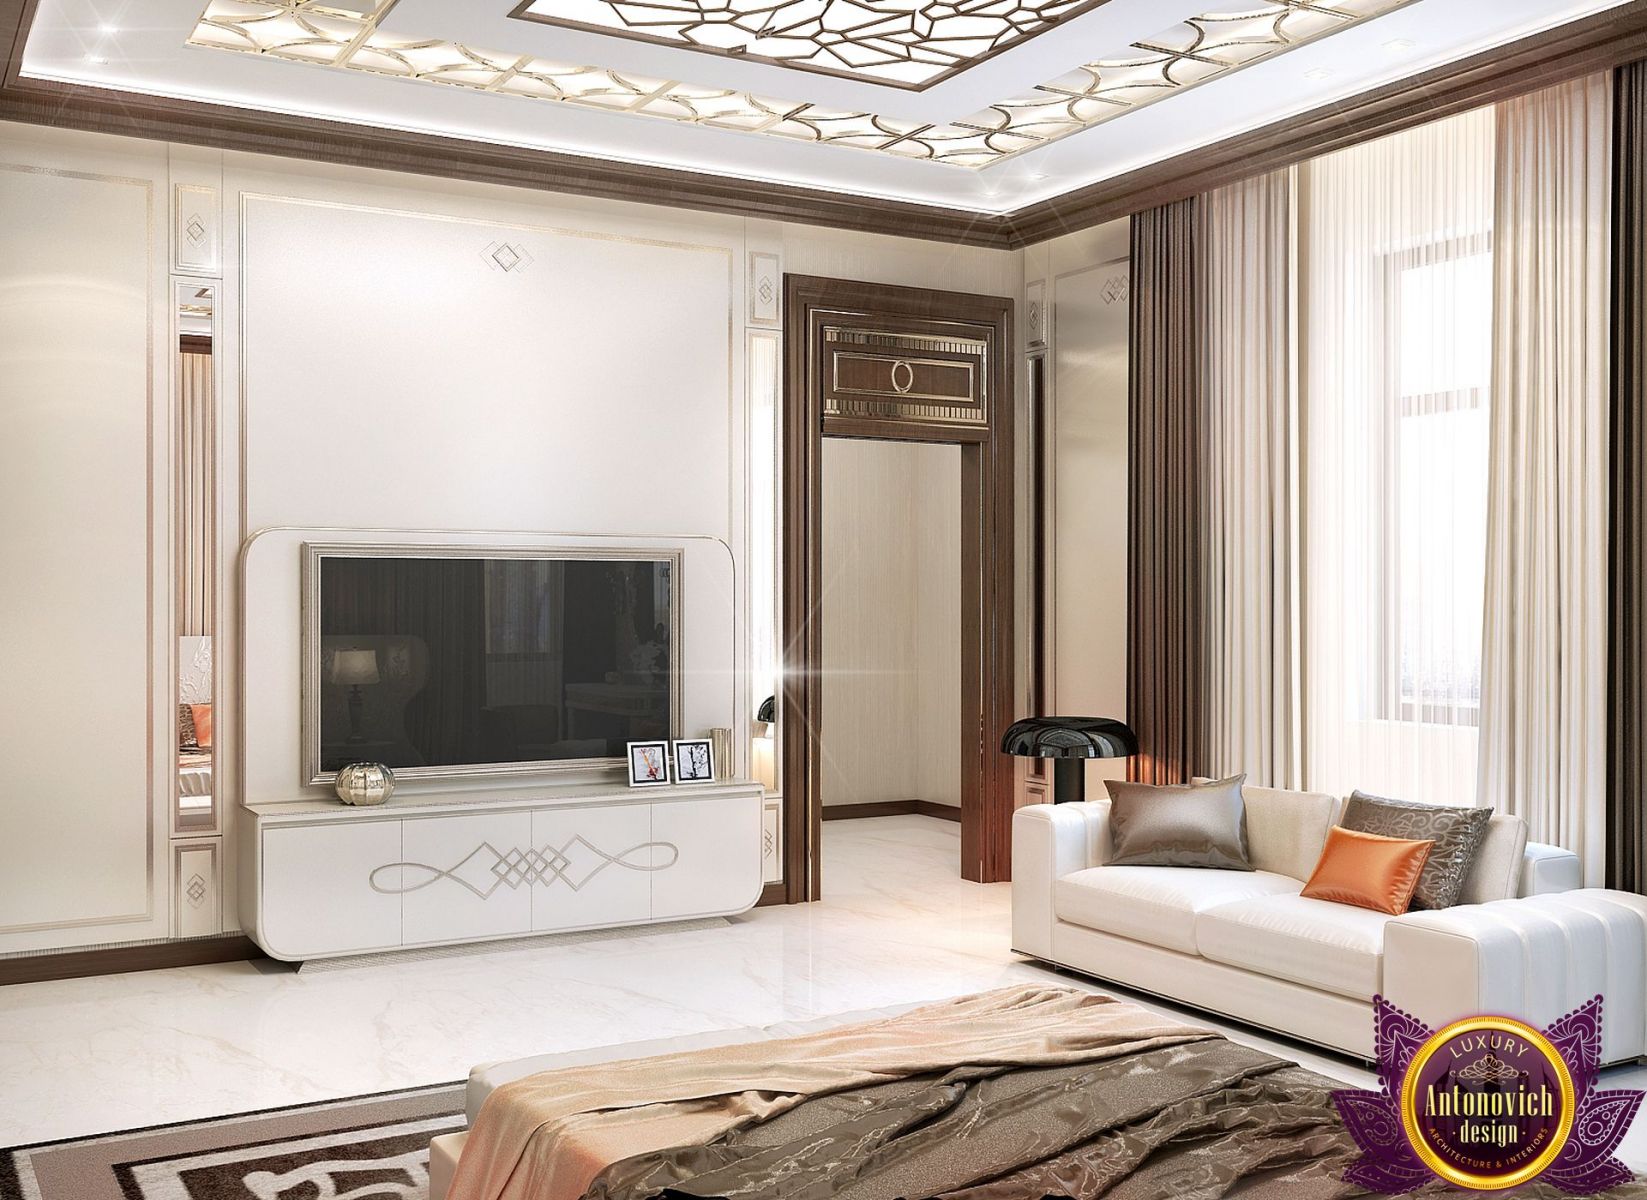 Elegant master bedroom design with luxurious bedding